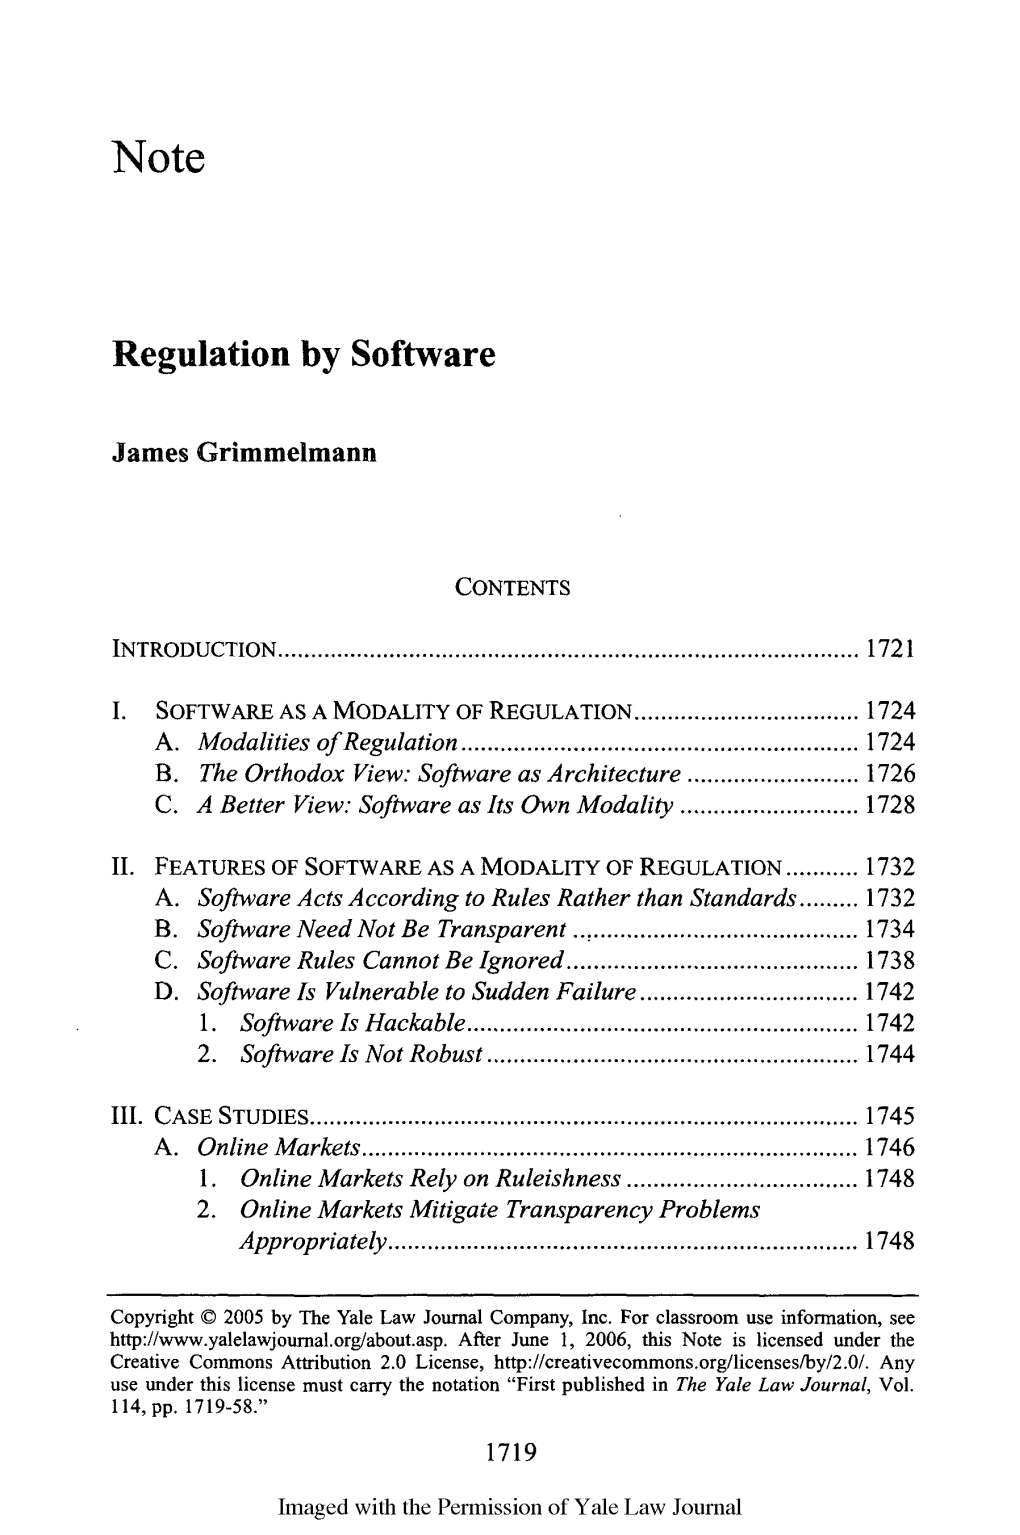 Regulation by Software